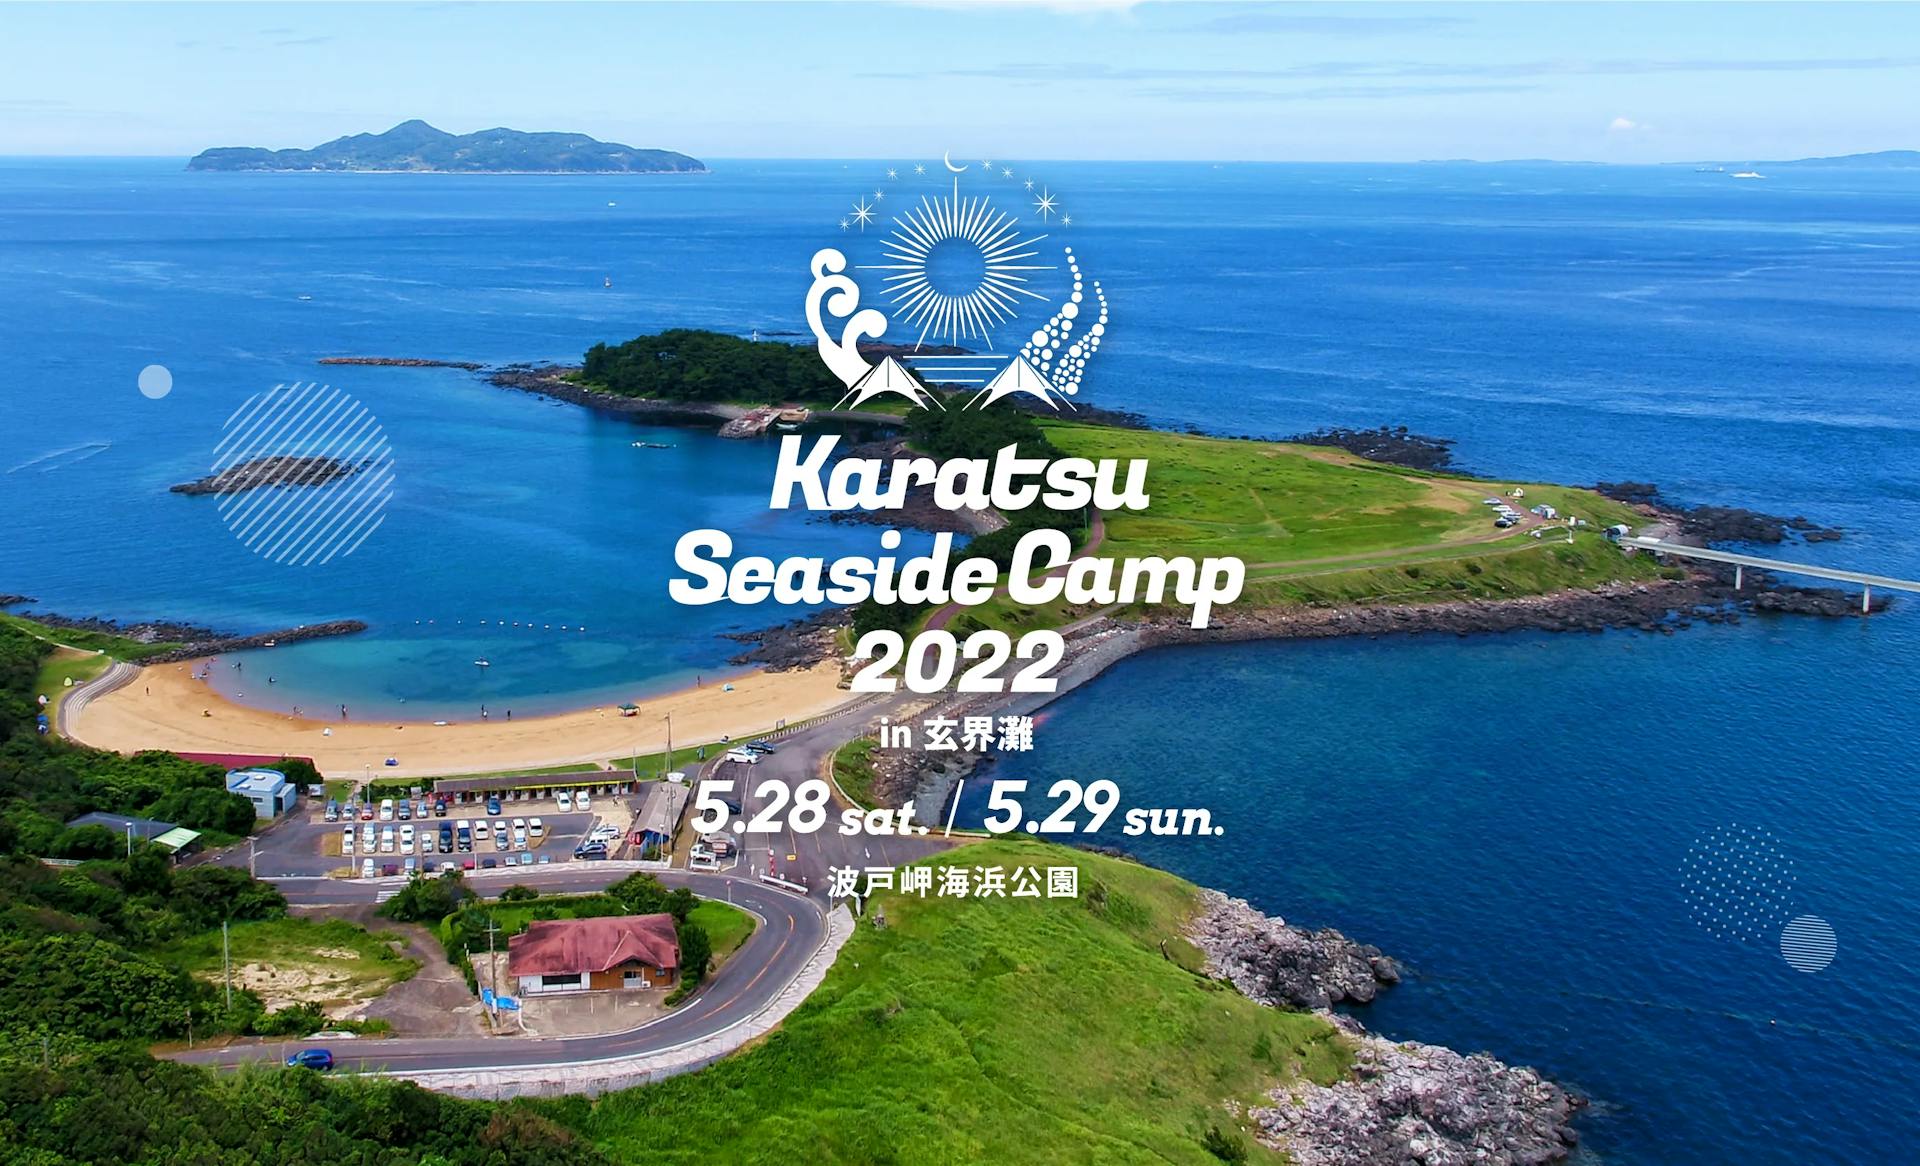 Karatsu Seaside Camp 2022 in 玄界灘へ参加